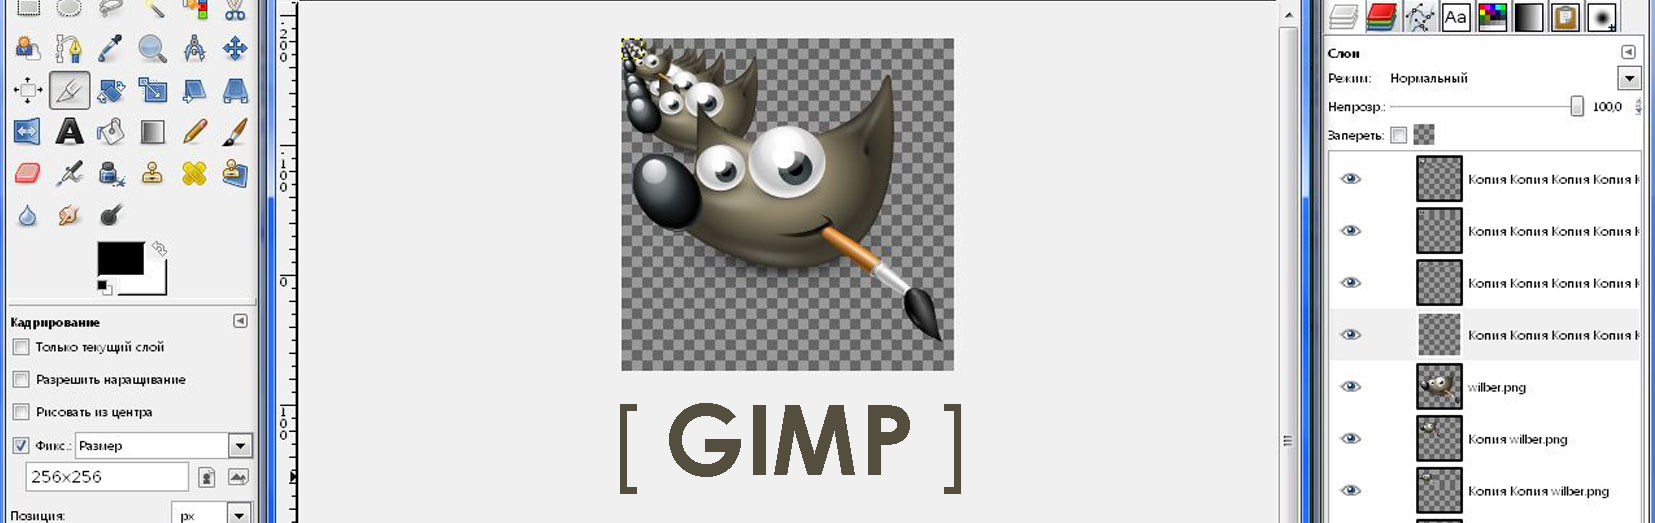 gimp vs photoshop layers